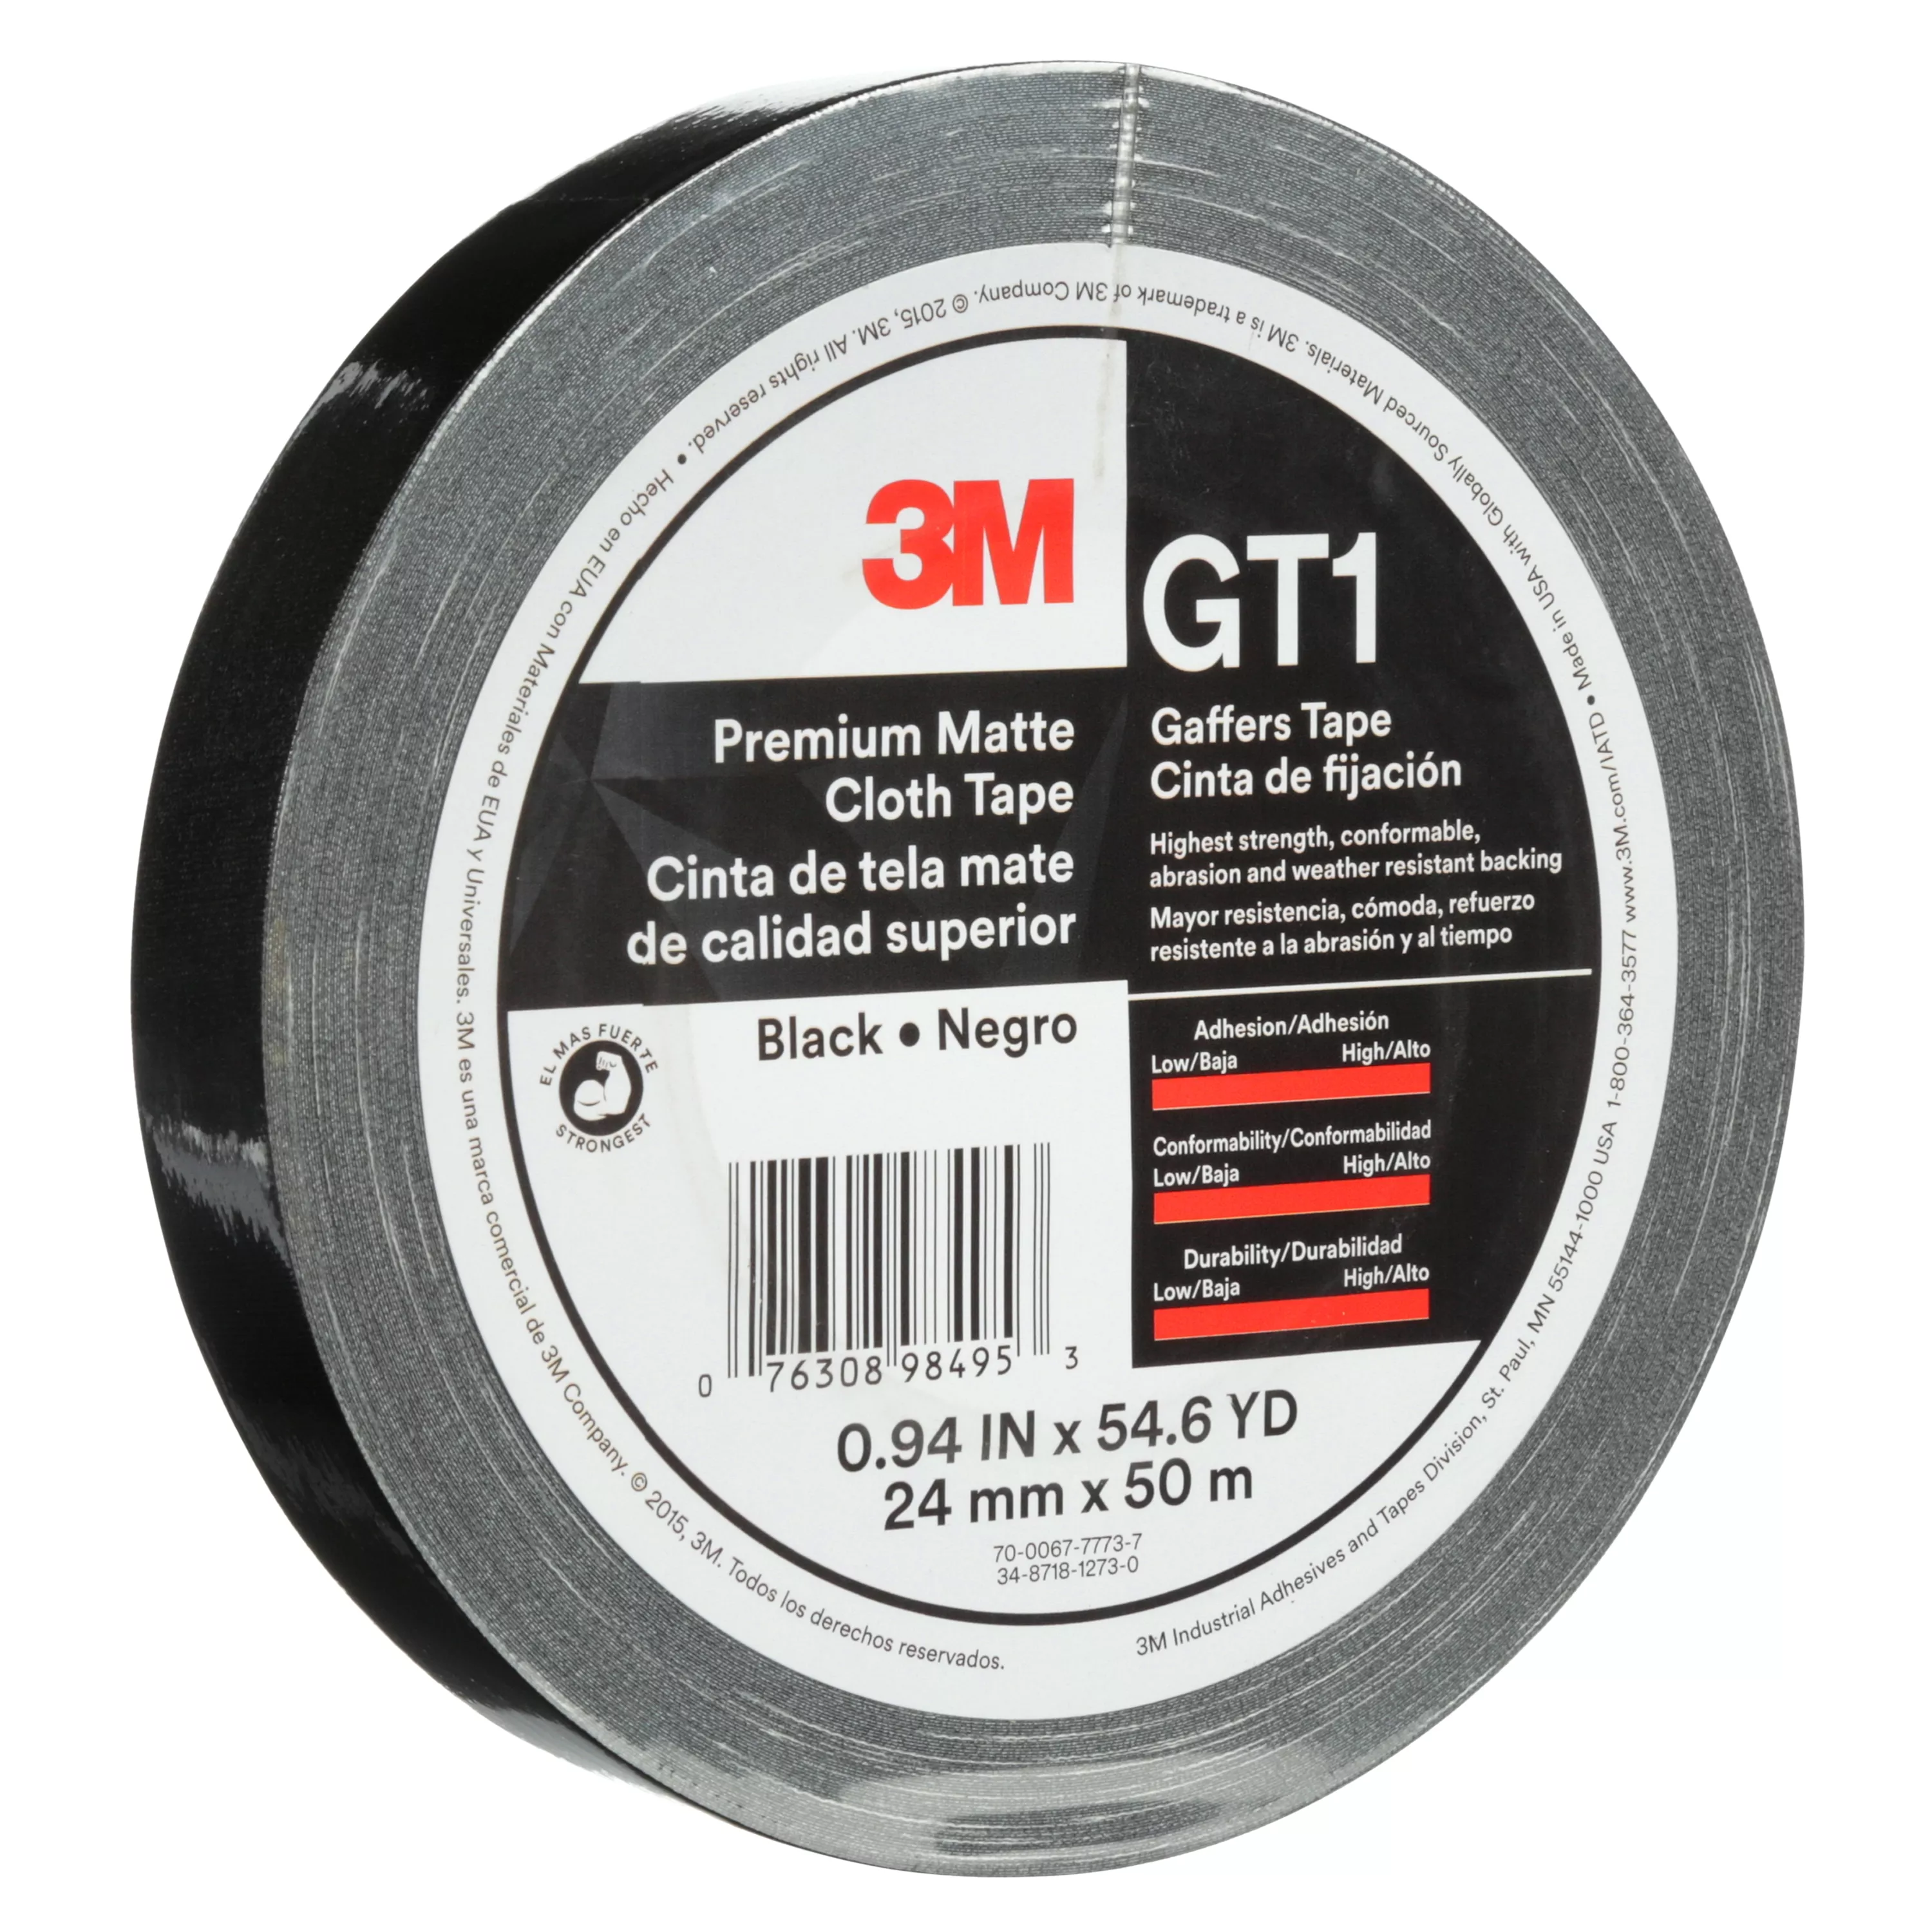 3M™ Premium Matte Cloth (Gaffers) Tape GT1, Black, 24 mm x 50 m, 11 mil,
48/Case